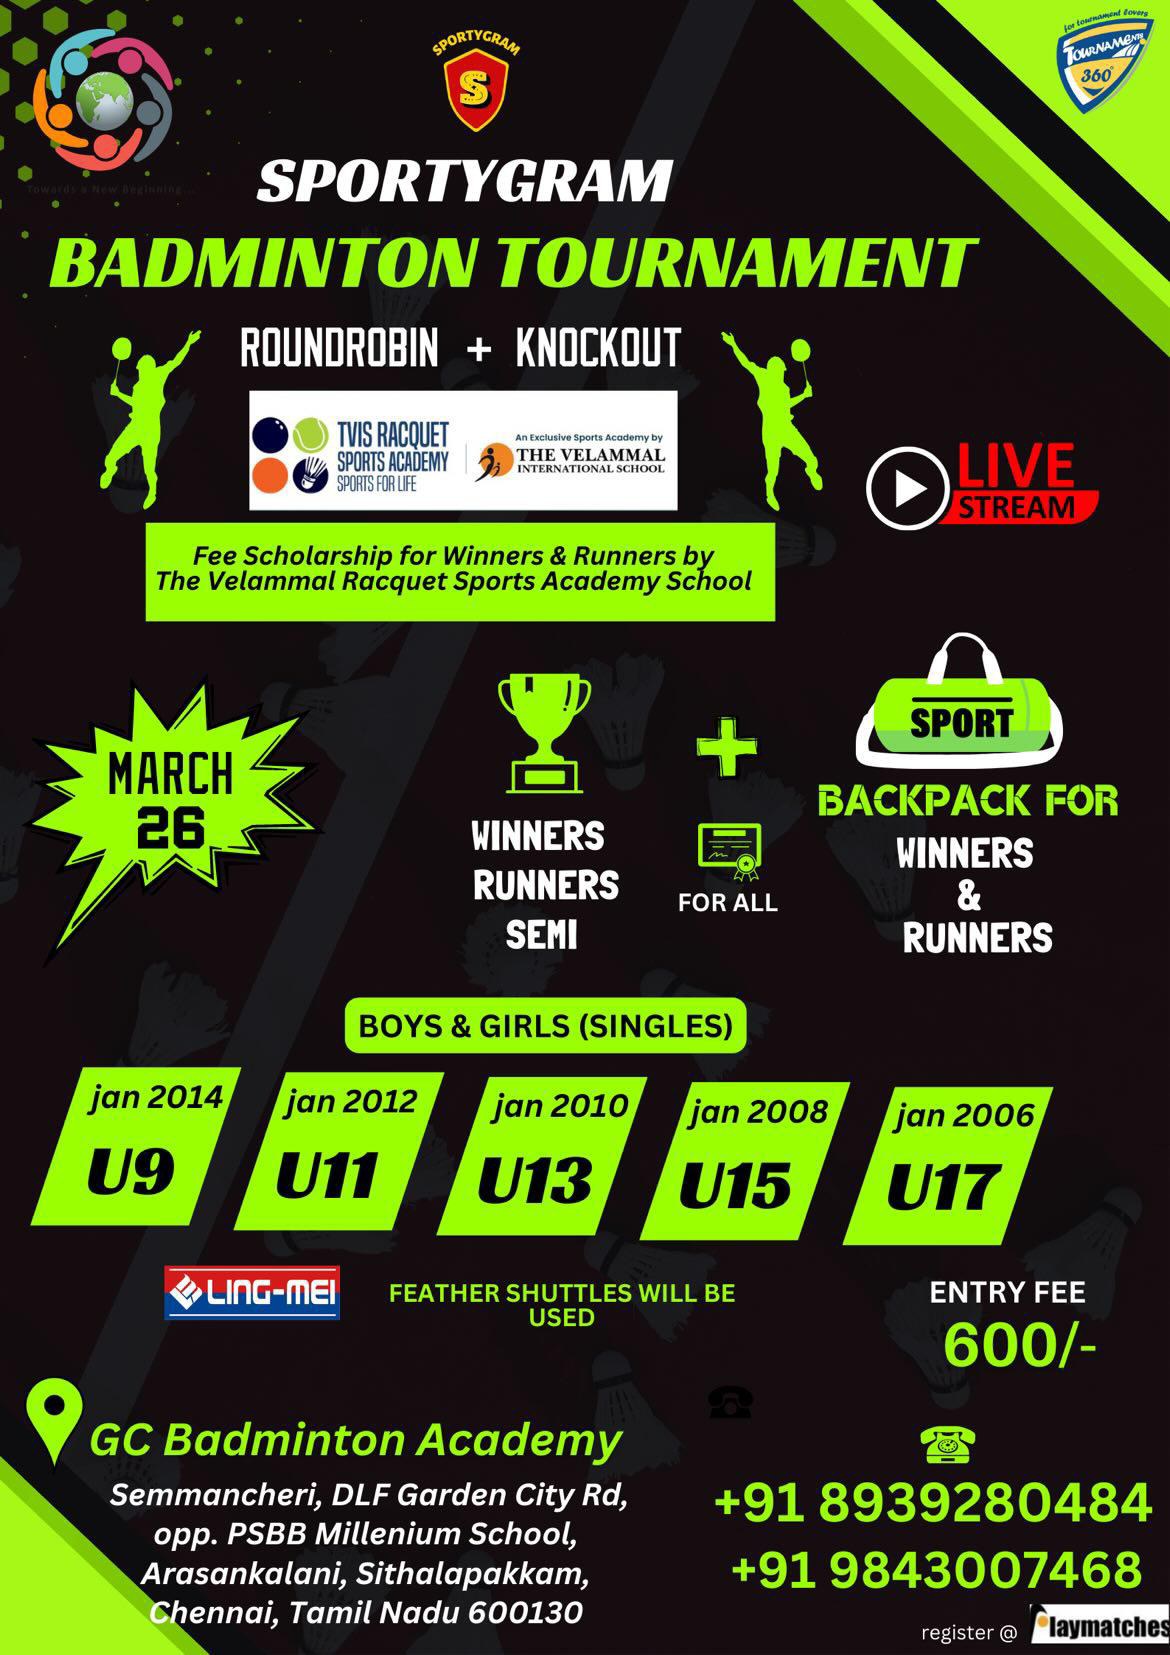 Sportygram presents Badminton Tournament in Chennai